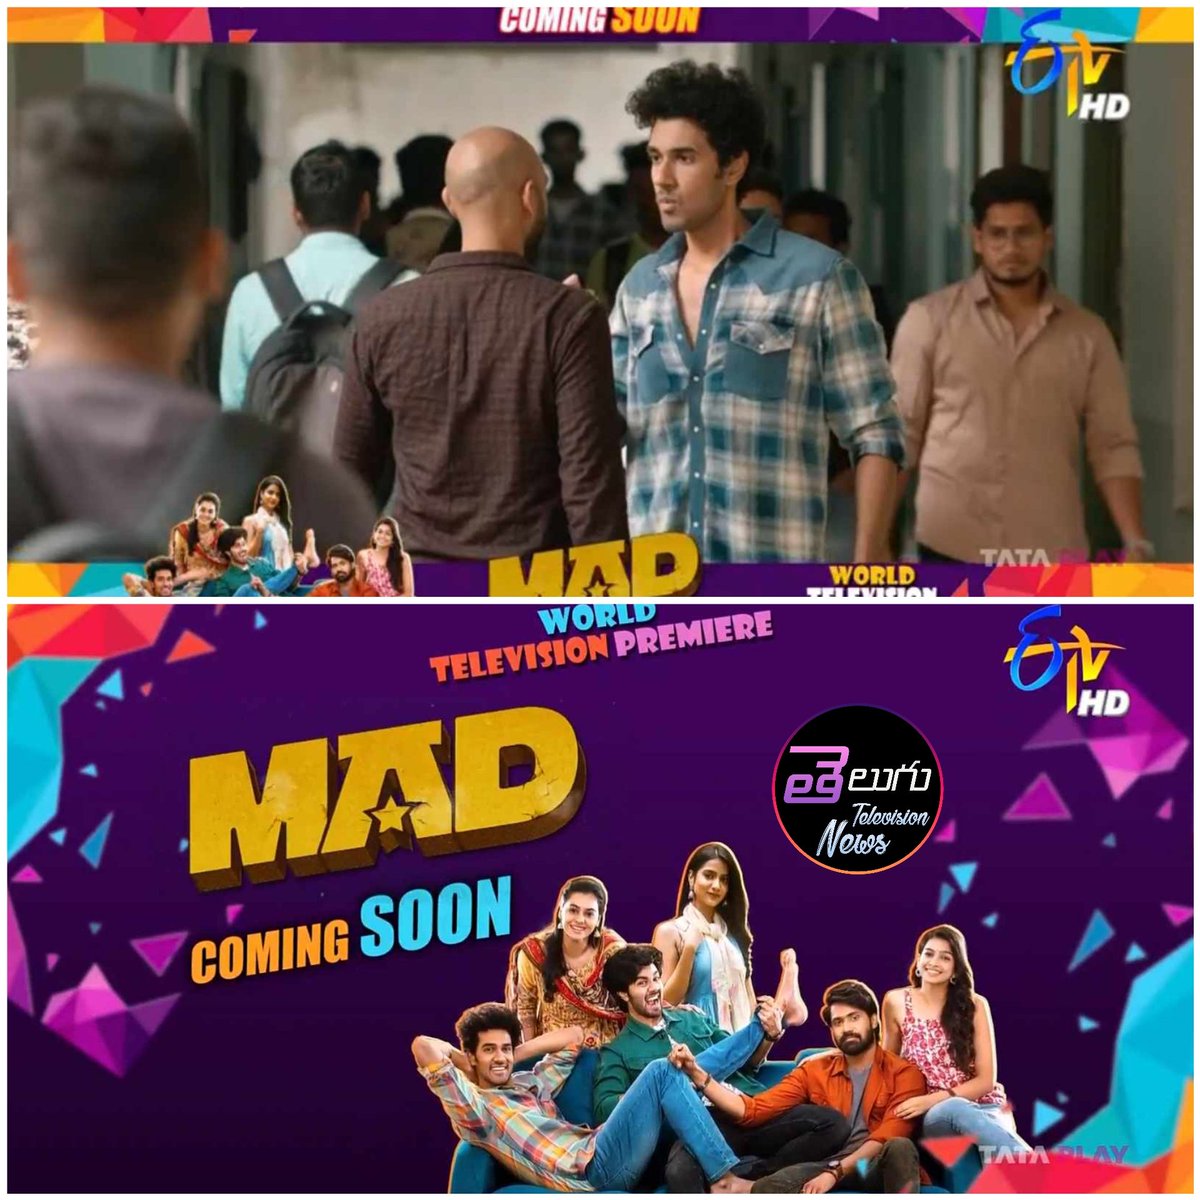 World Television Premiere
#Mad 
Coming Soon On #ETVTelugu 

@kalyanshankar23 @vamsi84 #HarikaSuryadevara #SaiSoujanya @Fortune4Cinemas @SitharaEnts @adityamusic #MADTheMovie